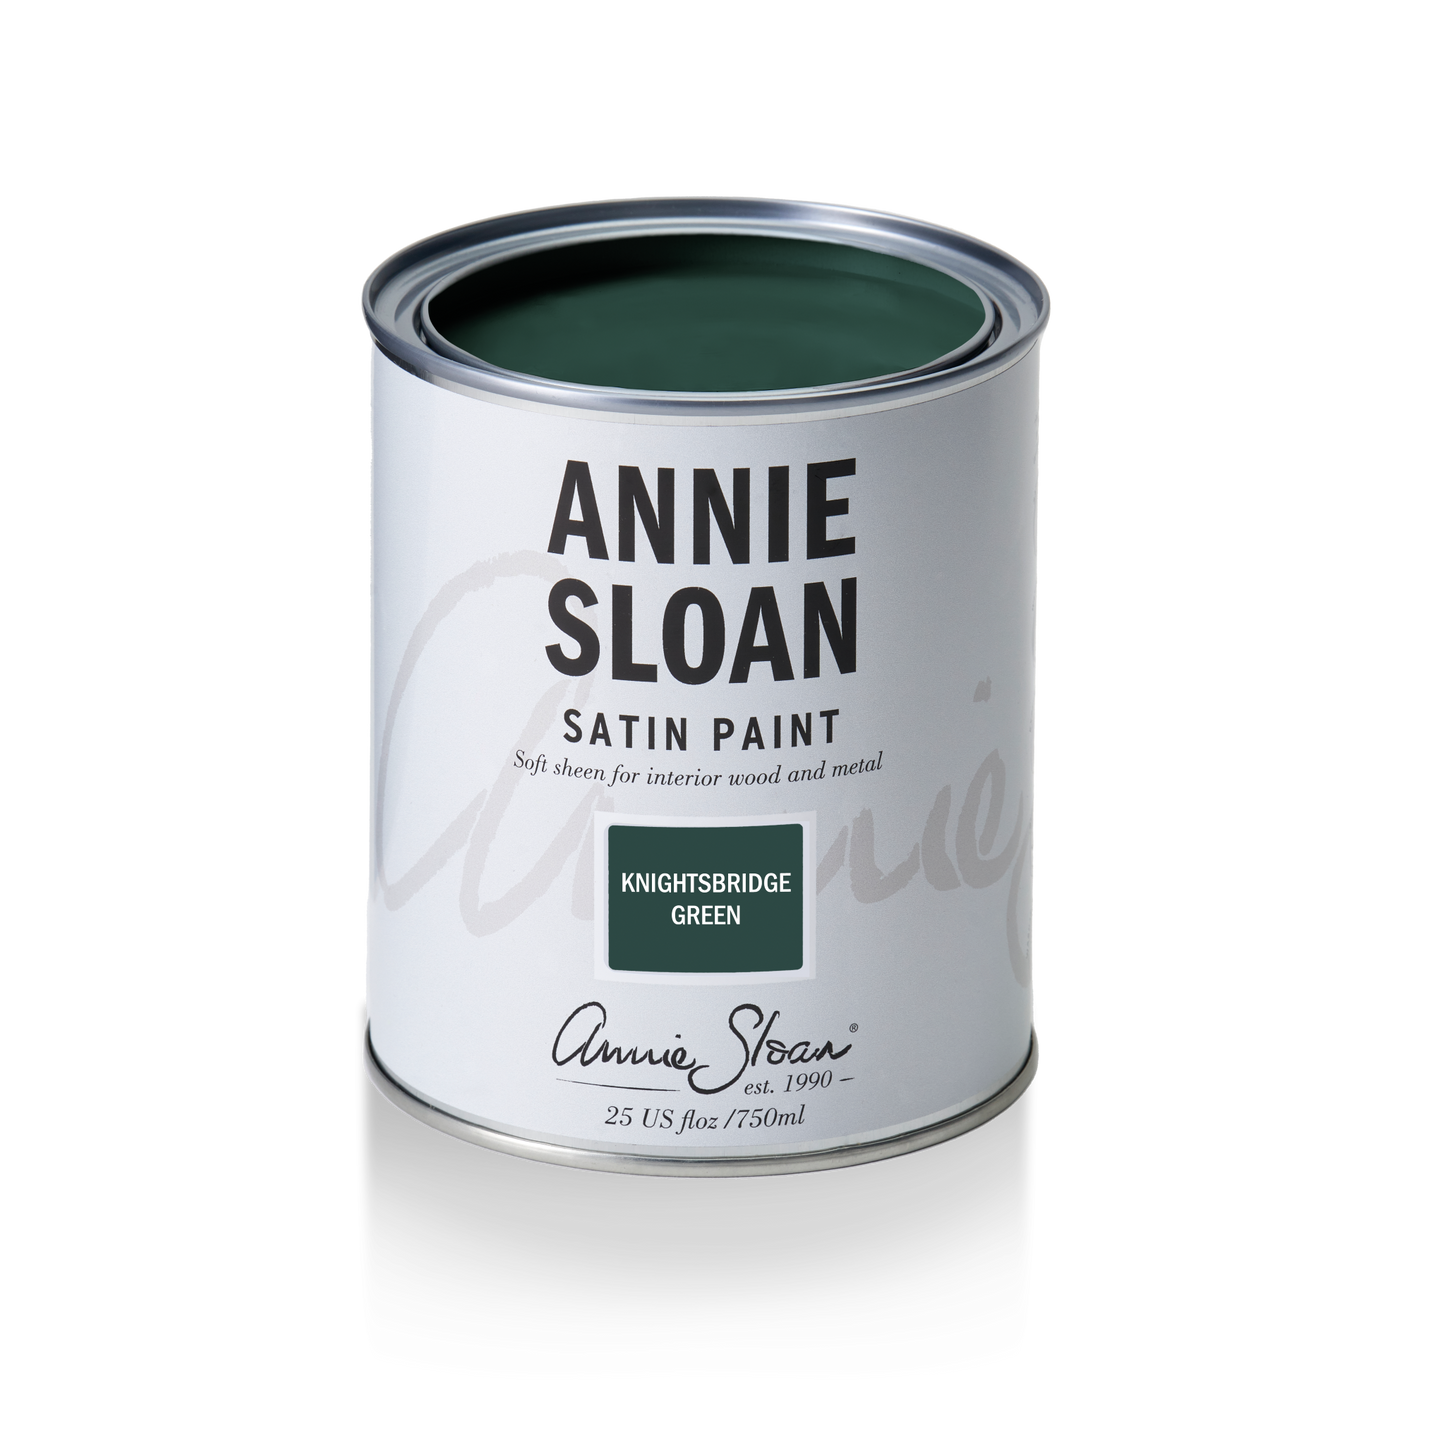 Annie Sloan Satin Paint Knightsbridge Green, 750 ml Tin